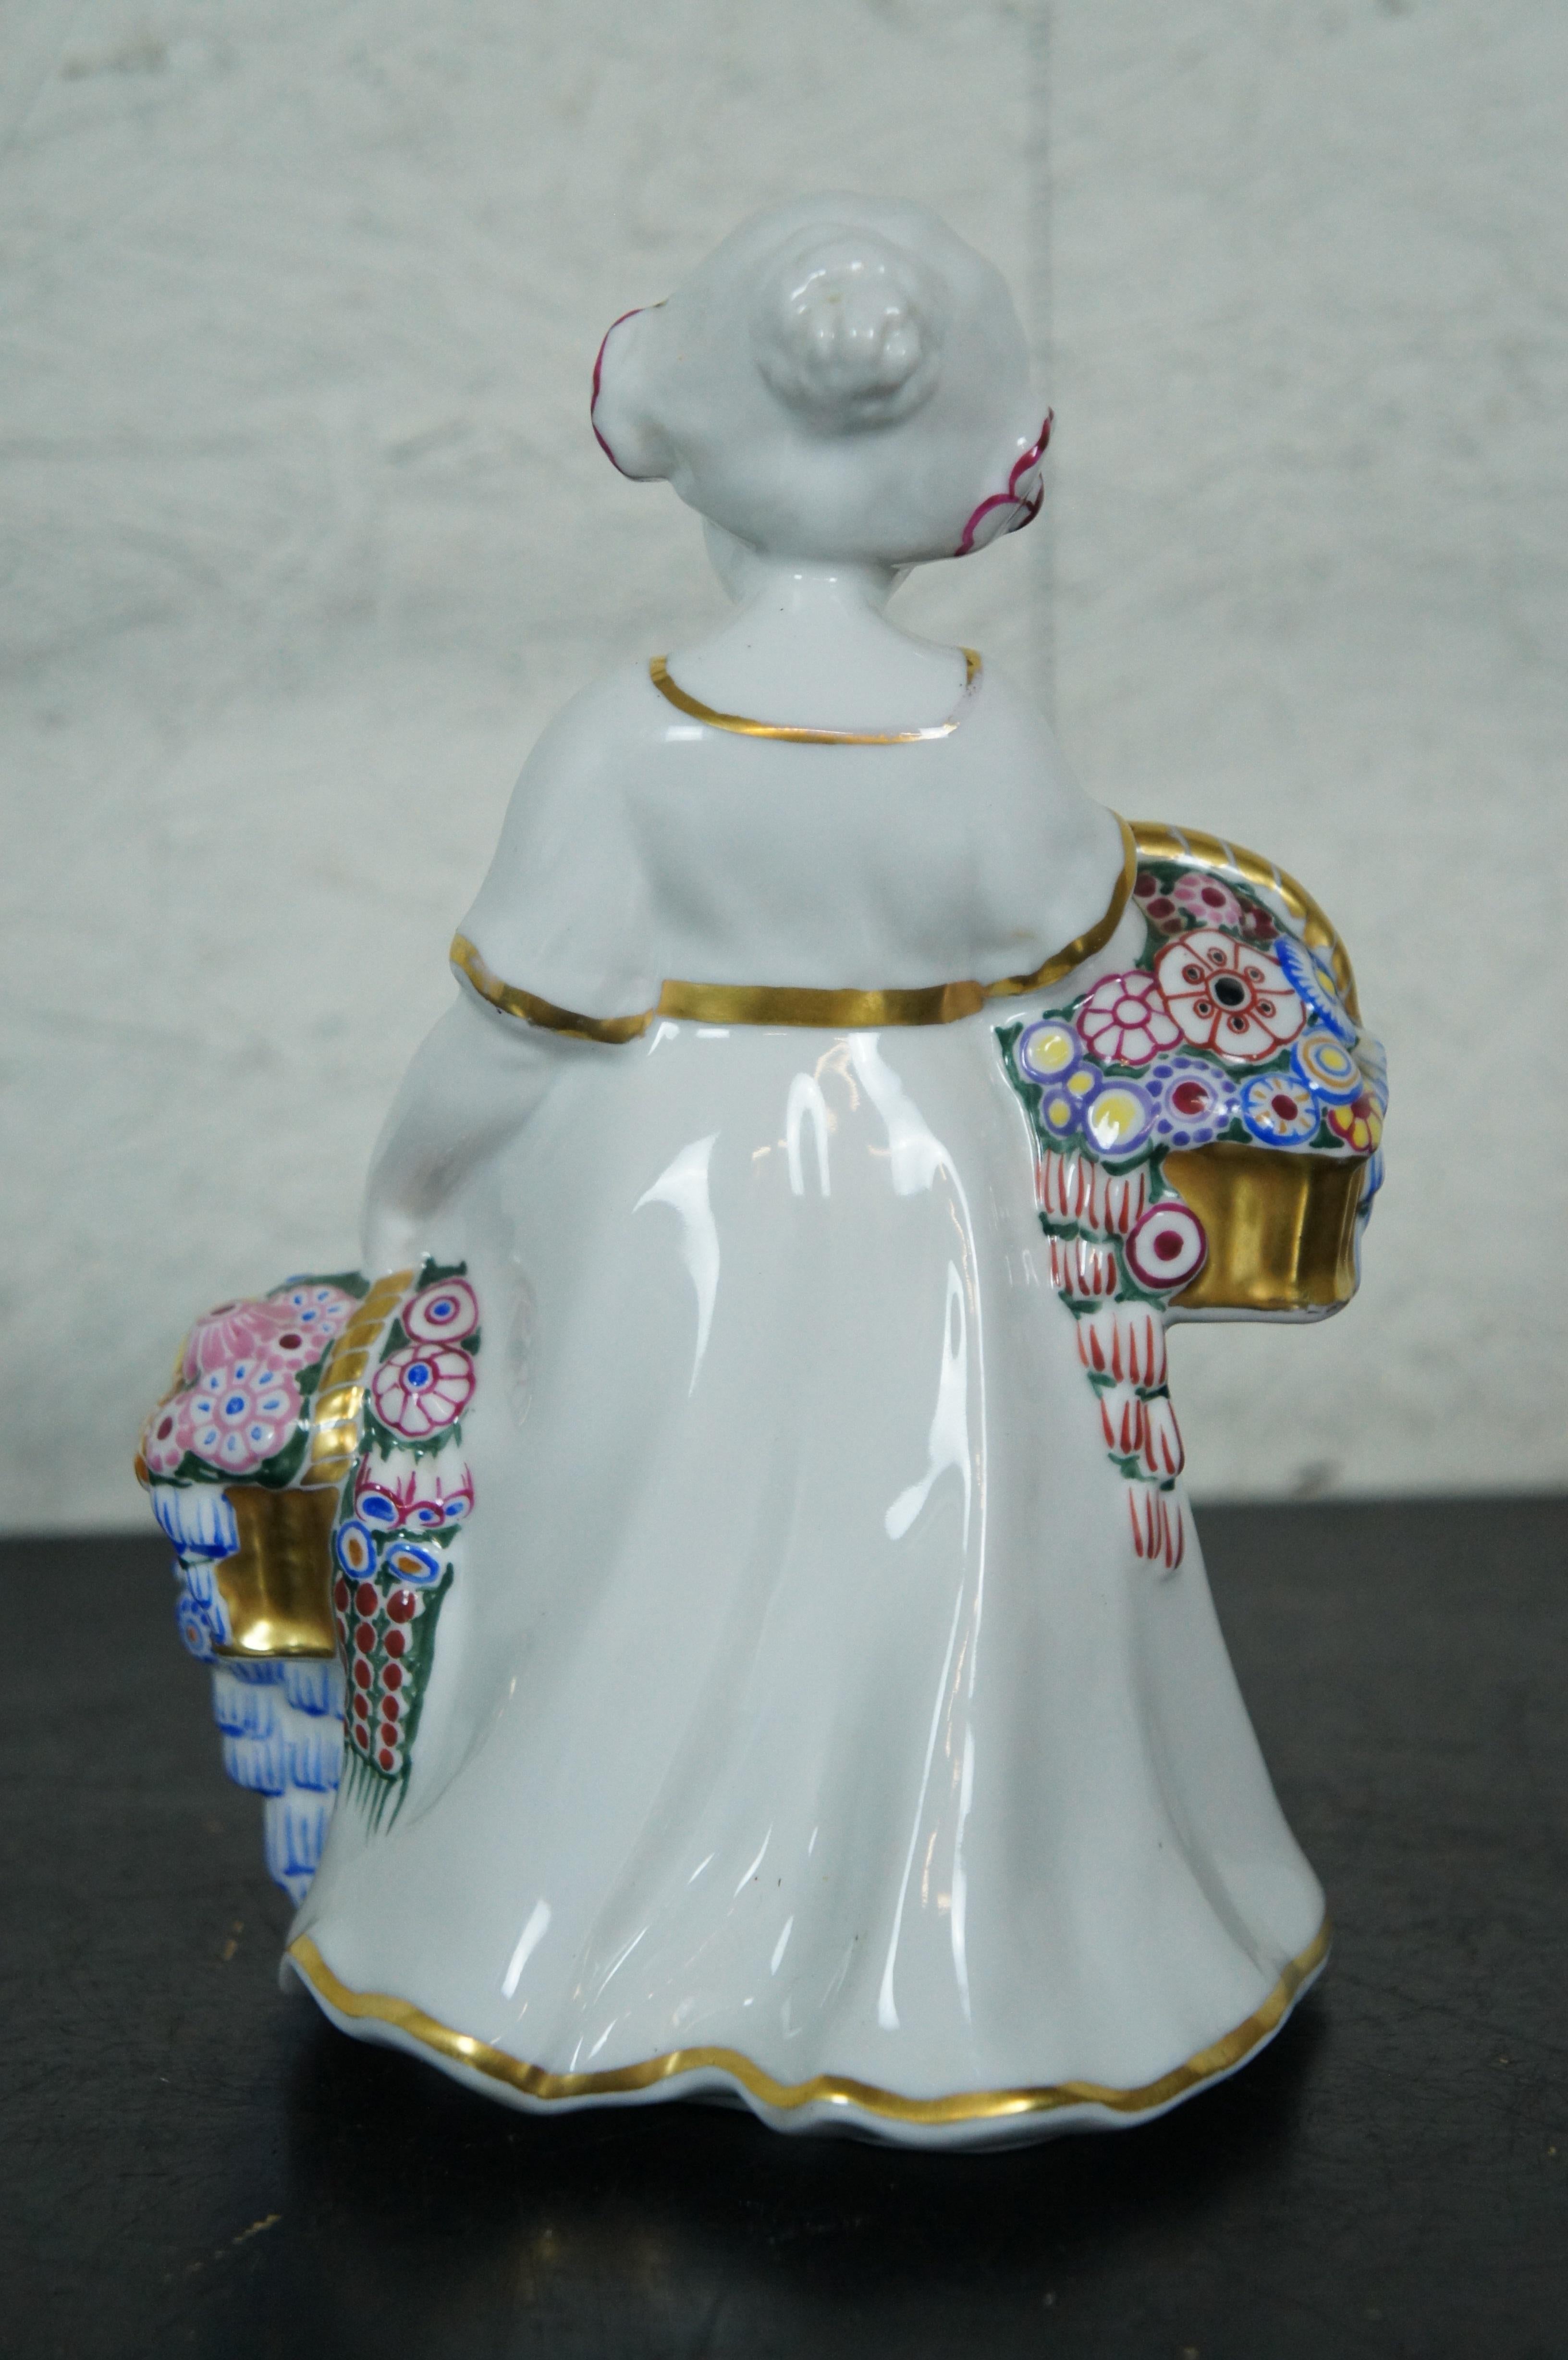 Antique Art Deco Bohemian Pirkenhammer Porcelain Flower Girl Figurine In Good Condition For Sale In Dayton, OH